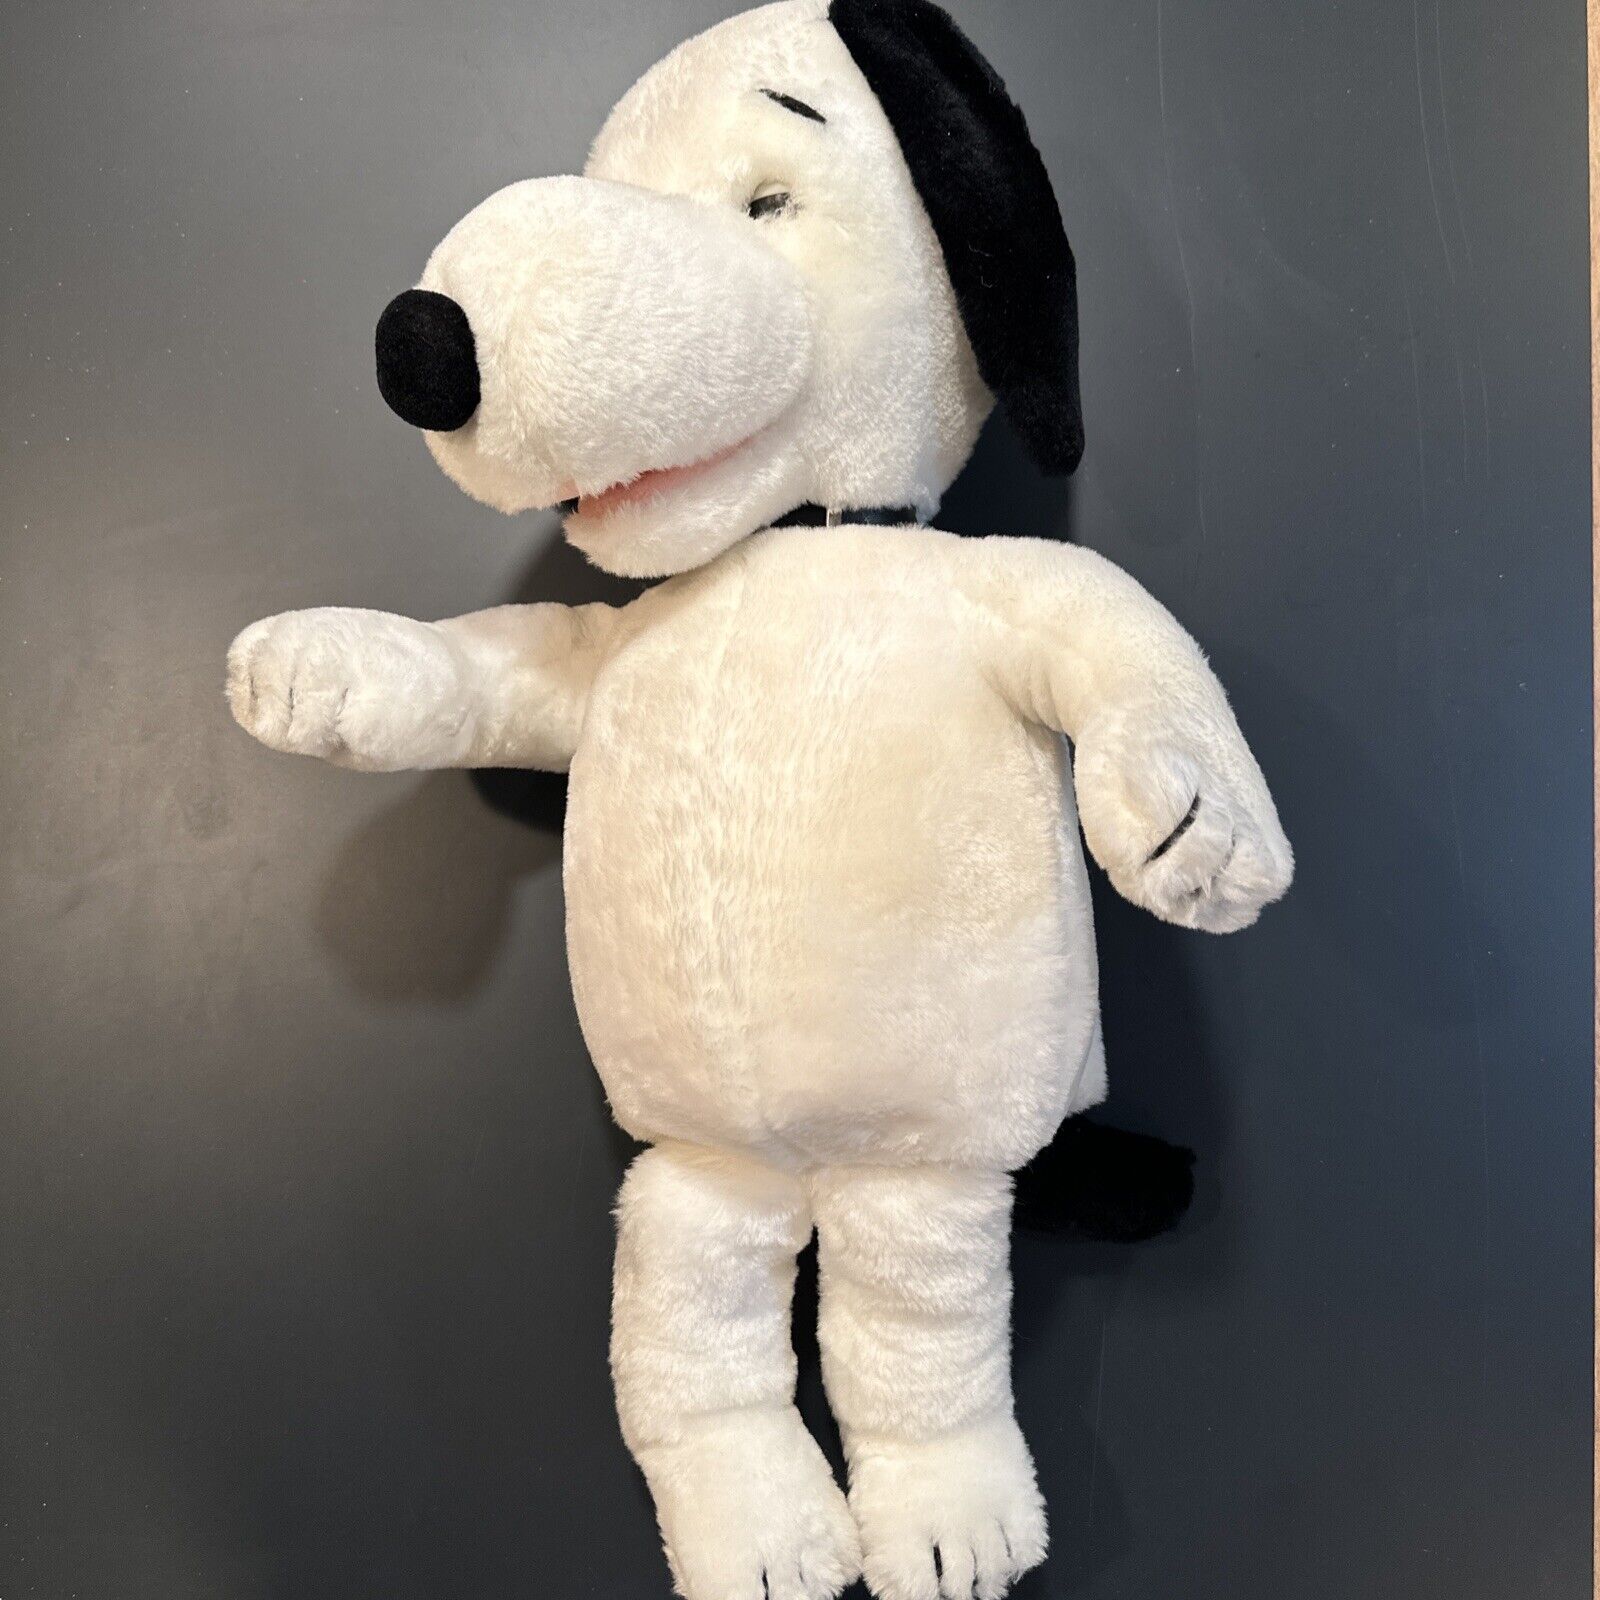 VTG World of Wonder WOW Snoopy Stuffed Animated Plush Doll, Peanuts, Works Great